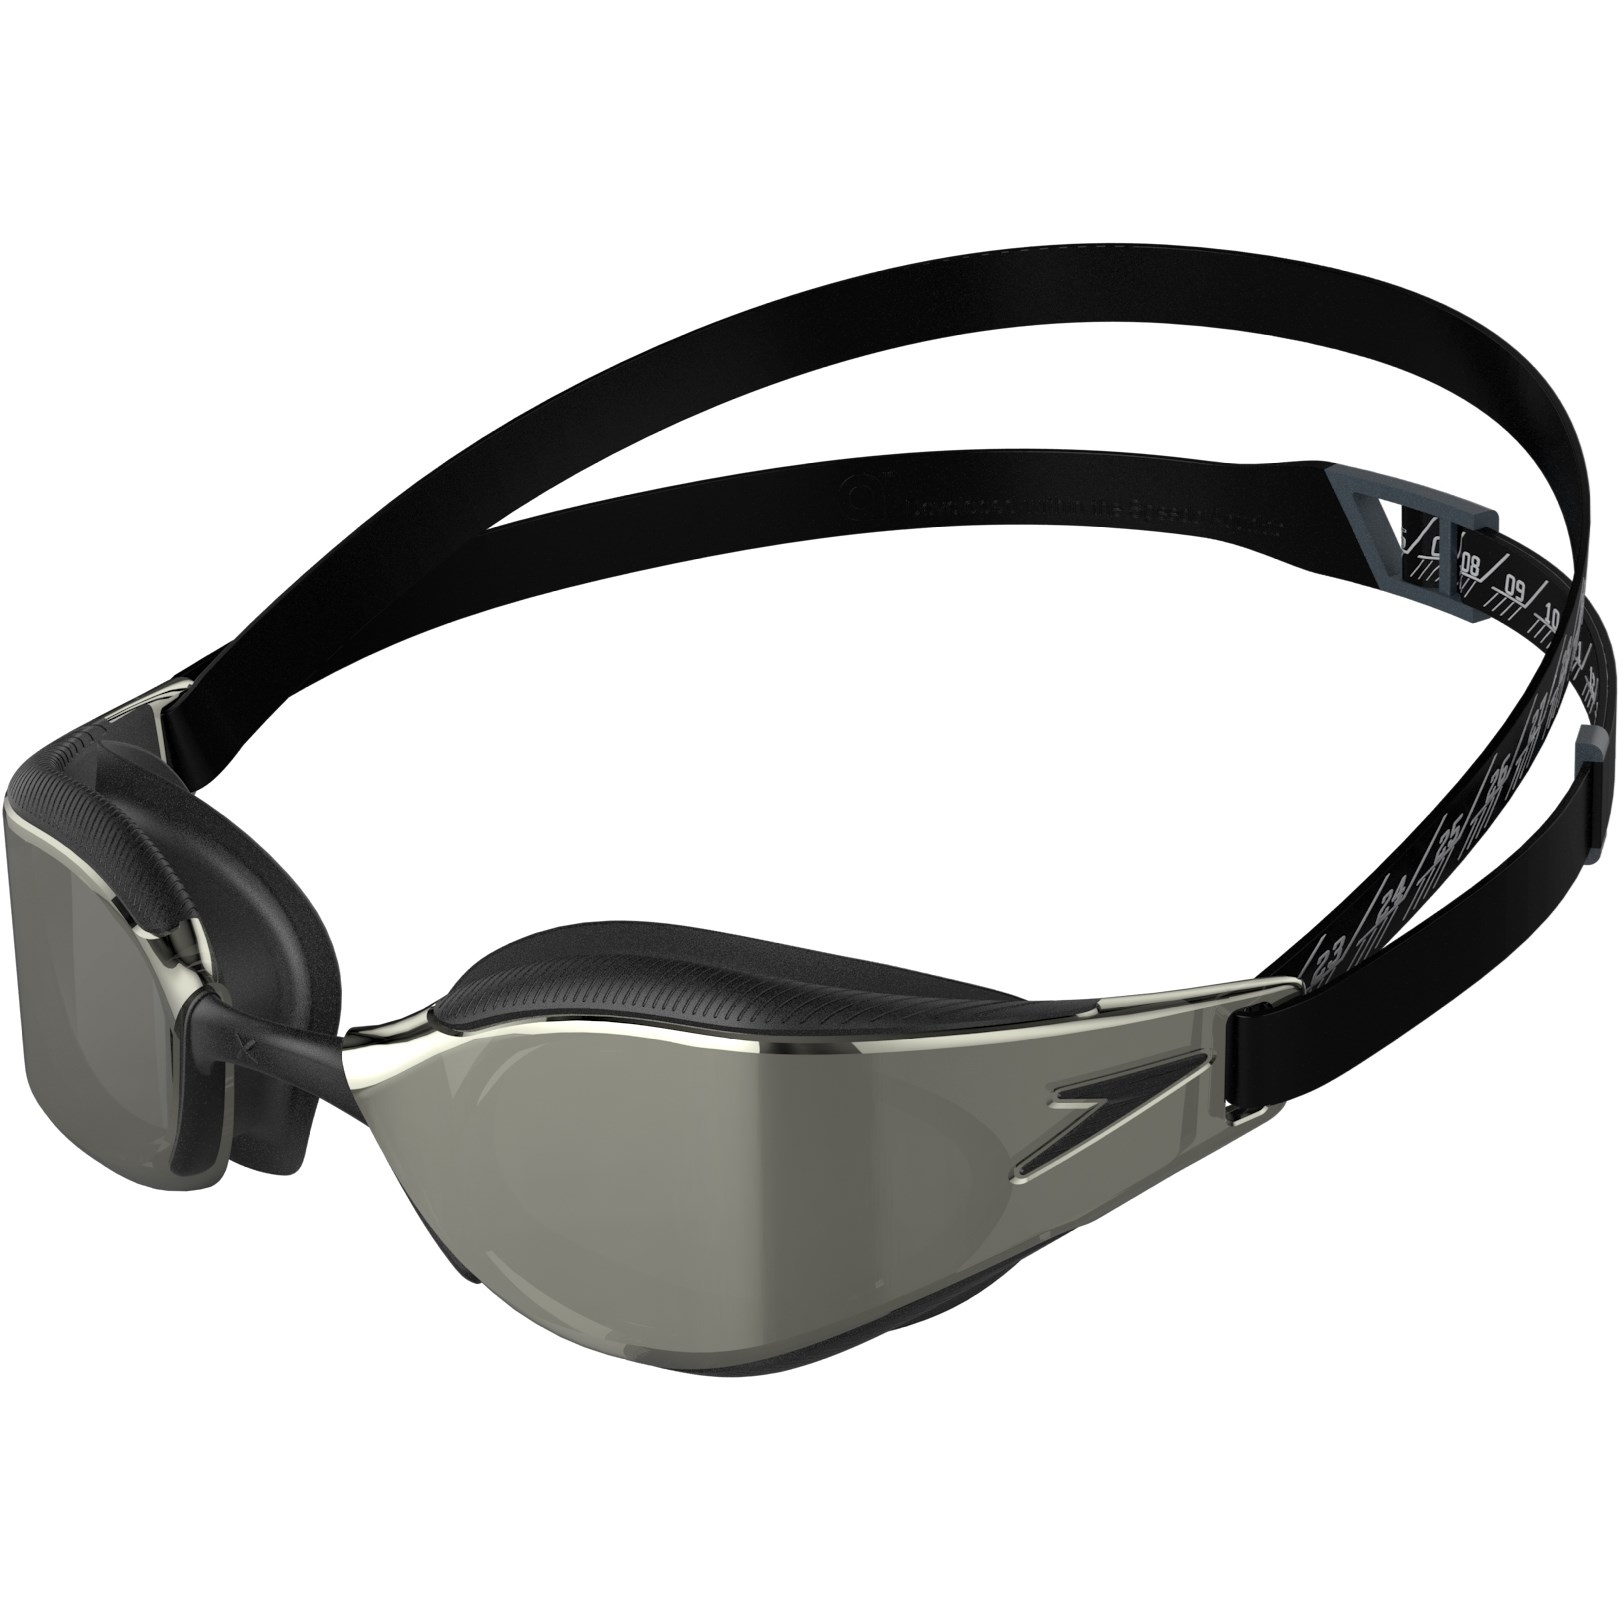 Productfoto van Speedo Fastskin Hyper Elite Mirror Swimming Googles - black/oxid grey/chrome